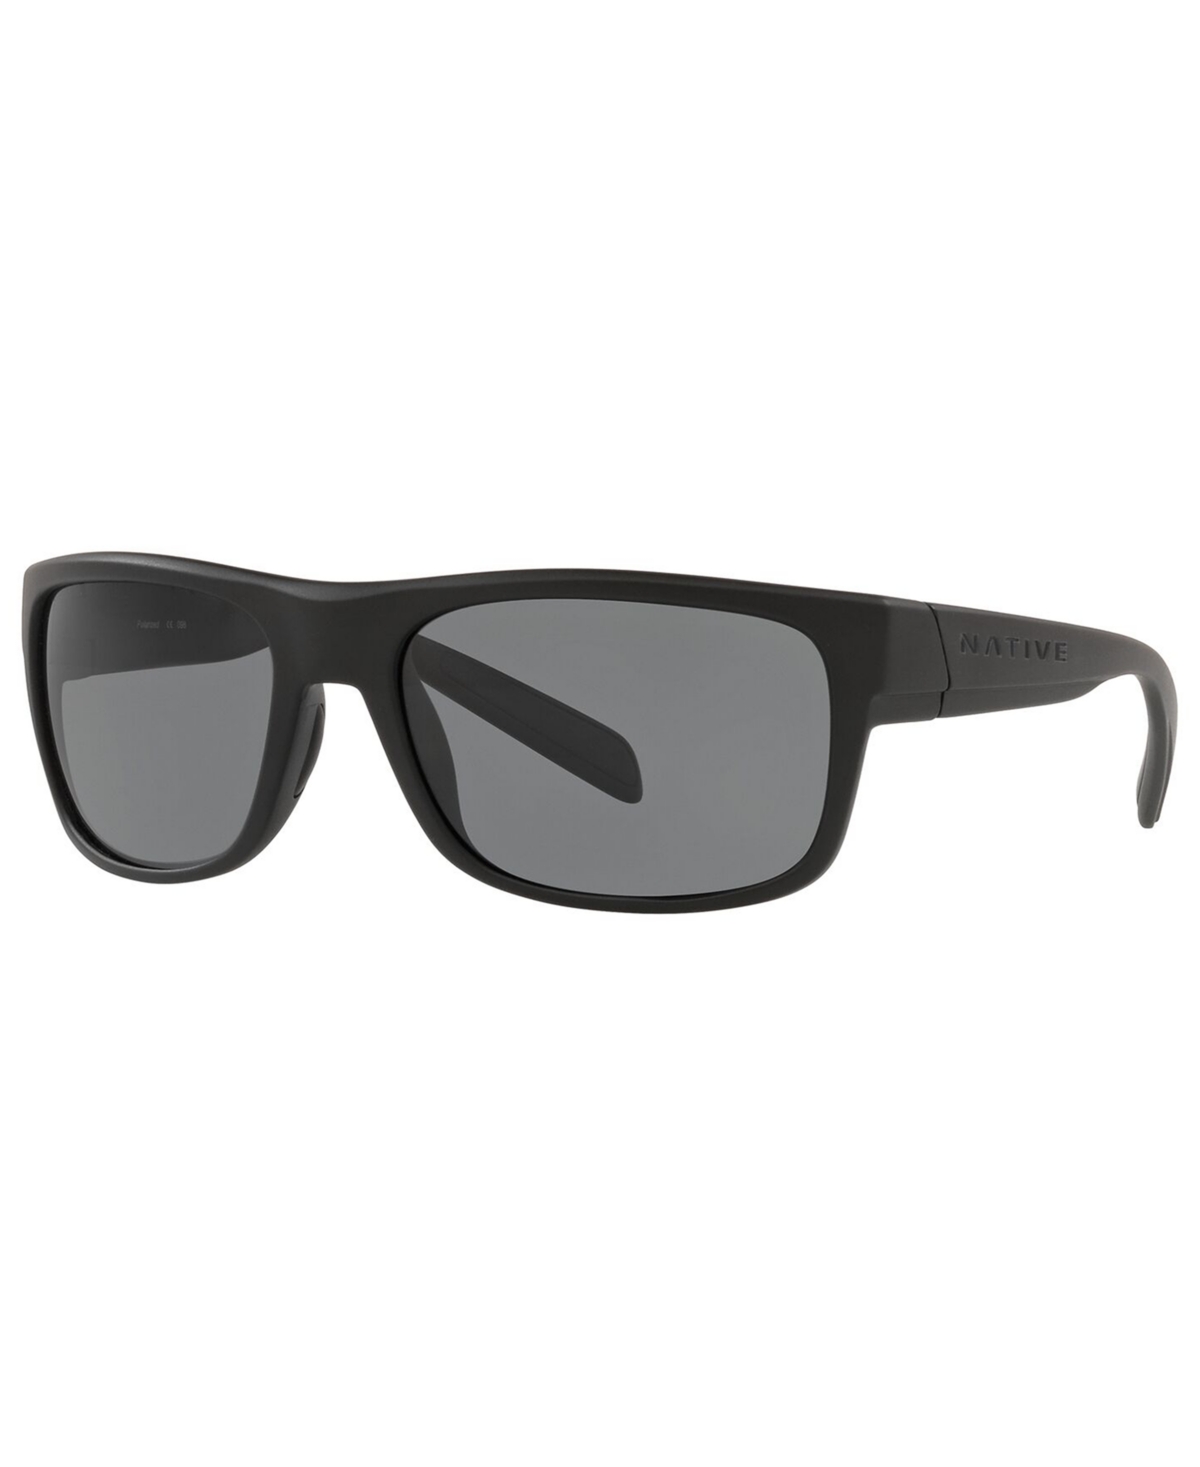 Native Unisex Polarized Sunglasses, XD0065 58 - MATTE BLACK/GREY